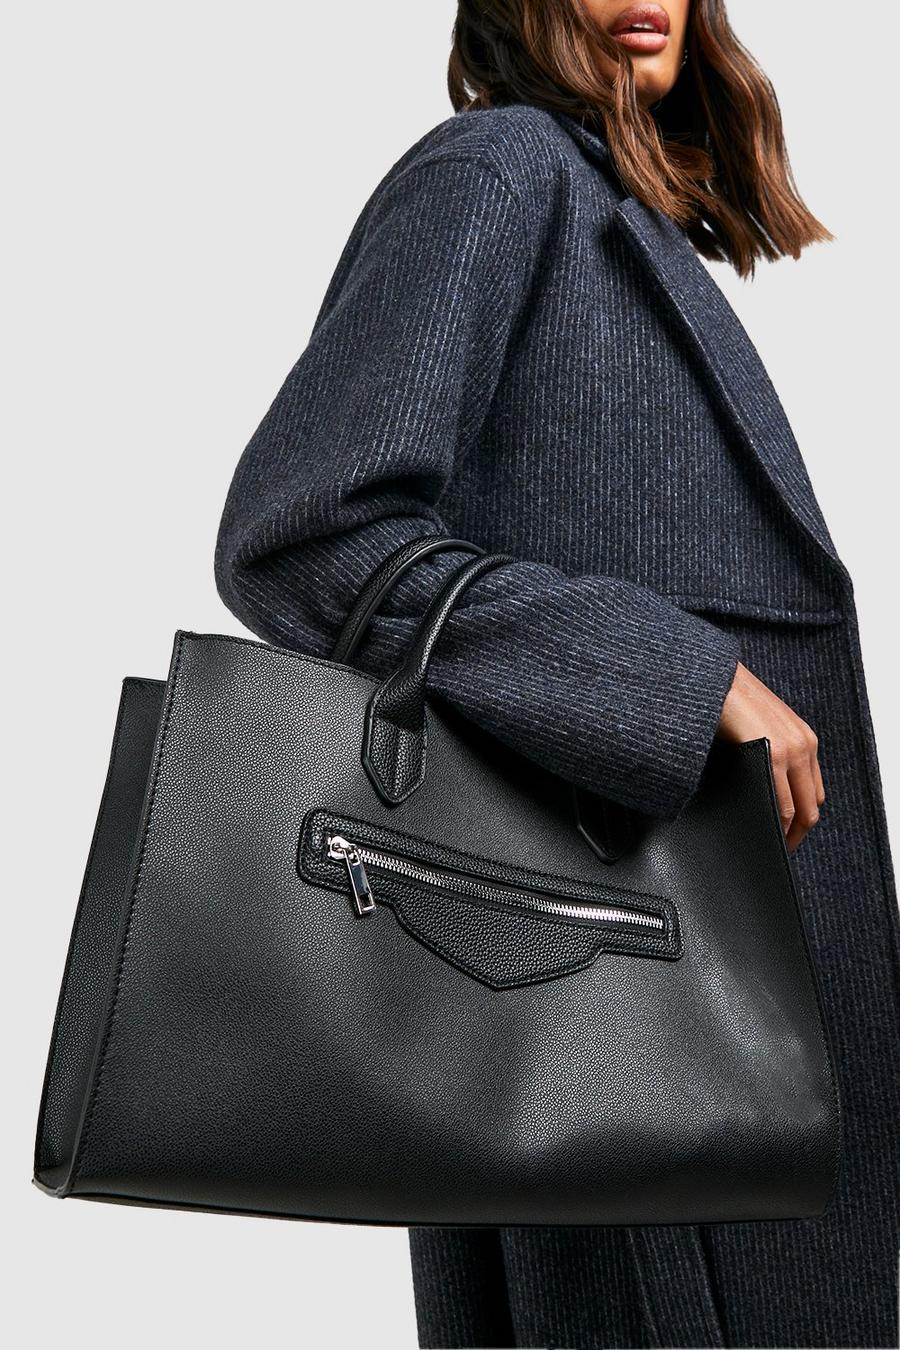 Black Structured Zip Tote Bag